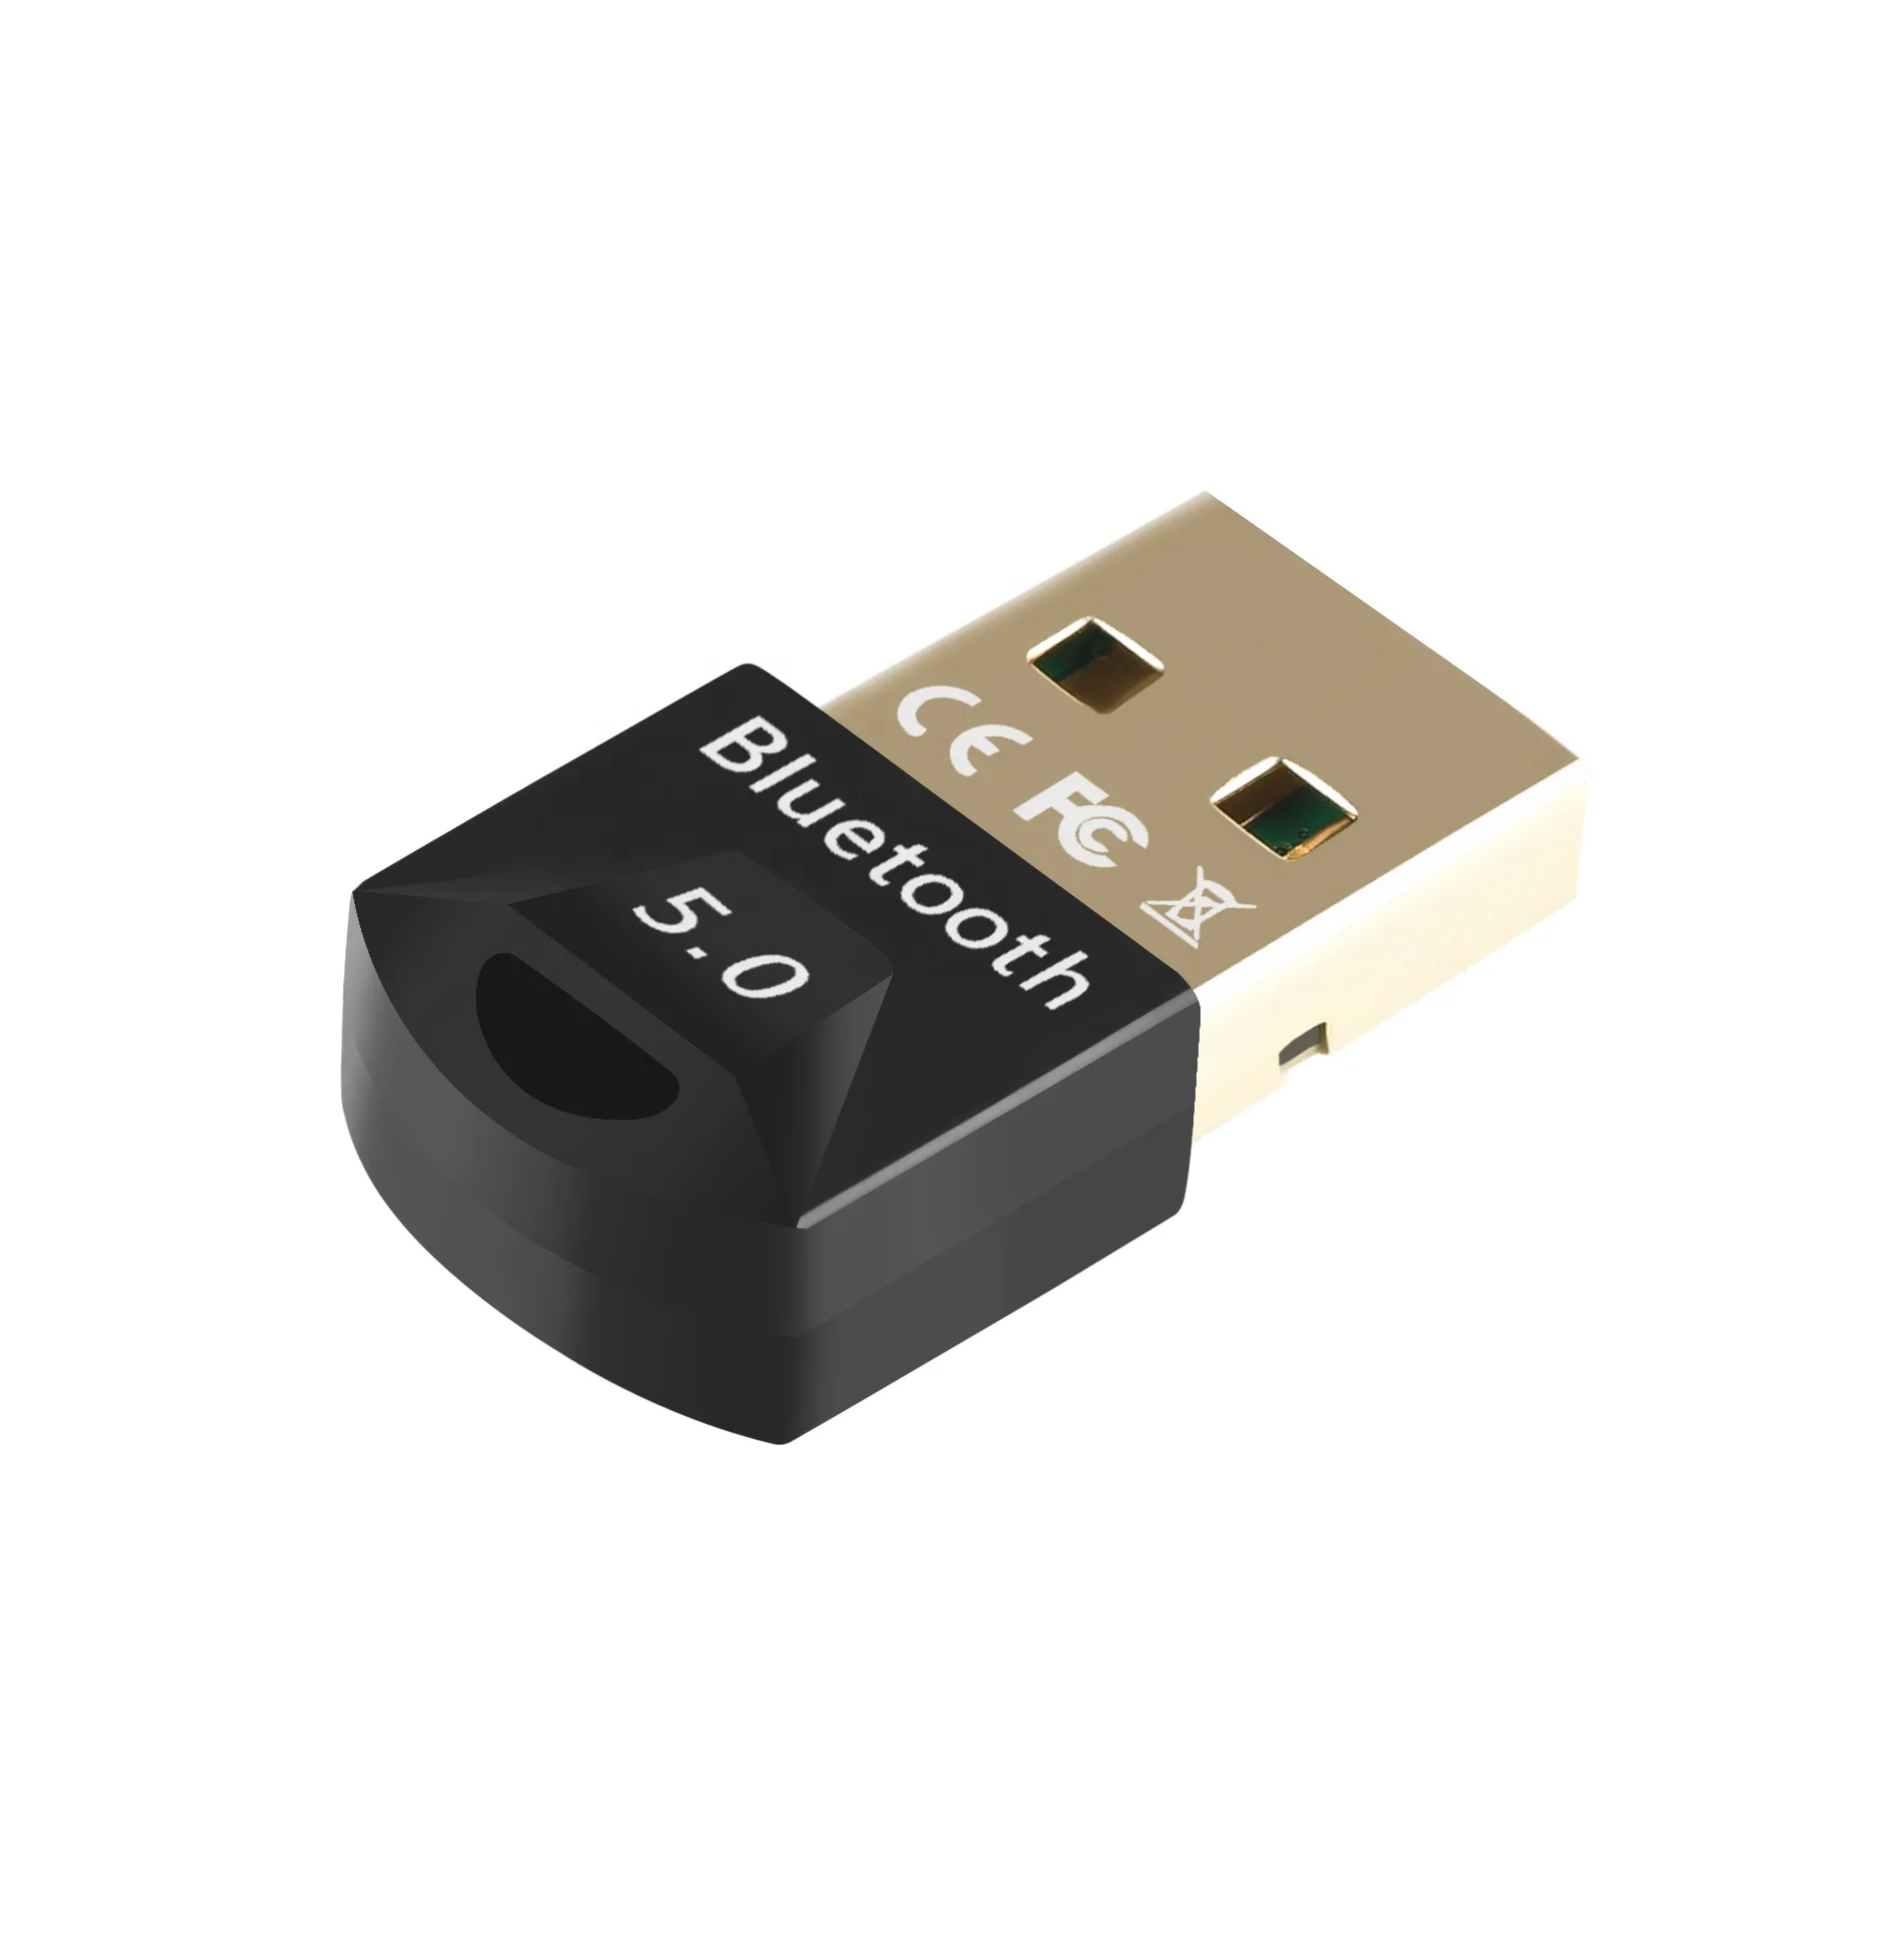 5.1 USB Bluetooth Adapter for PC 5.0 Bluetooth Dongle 5 0 Module Key  Receptor BT Transmitter